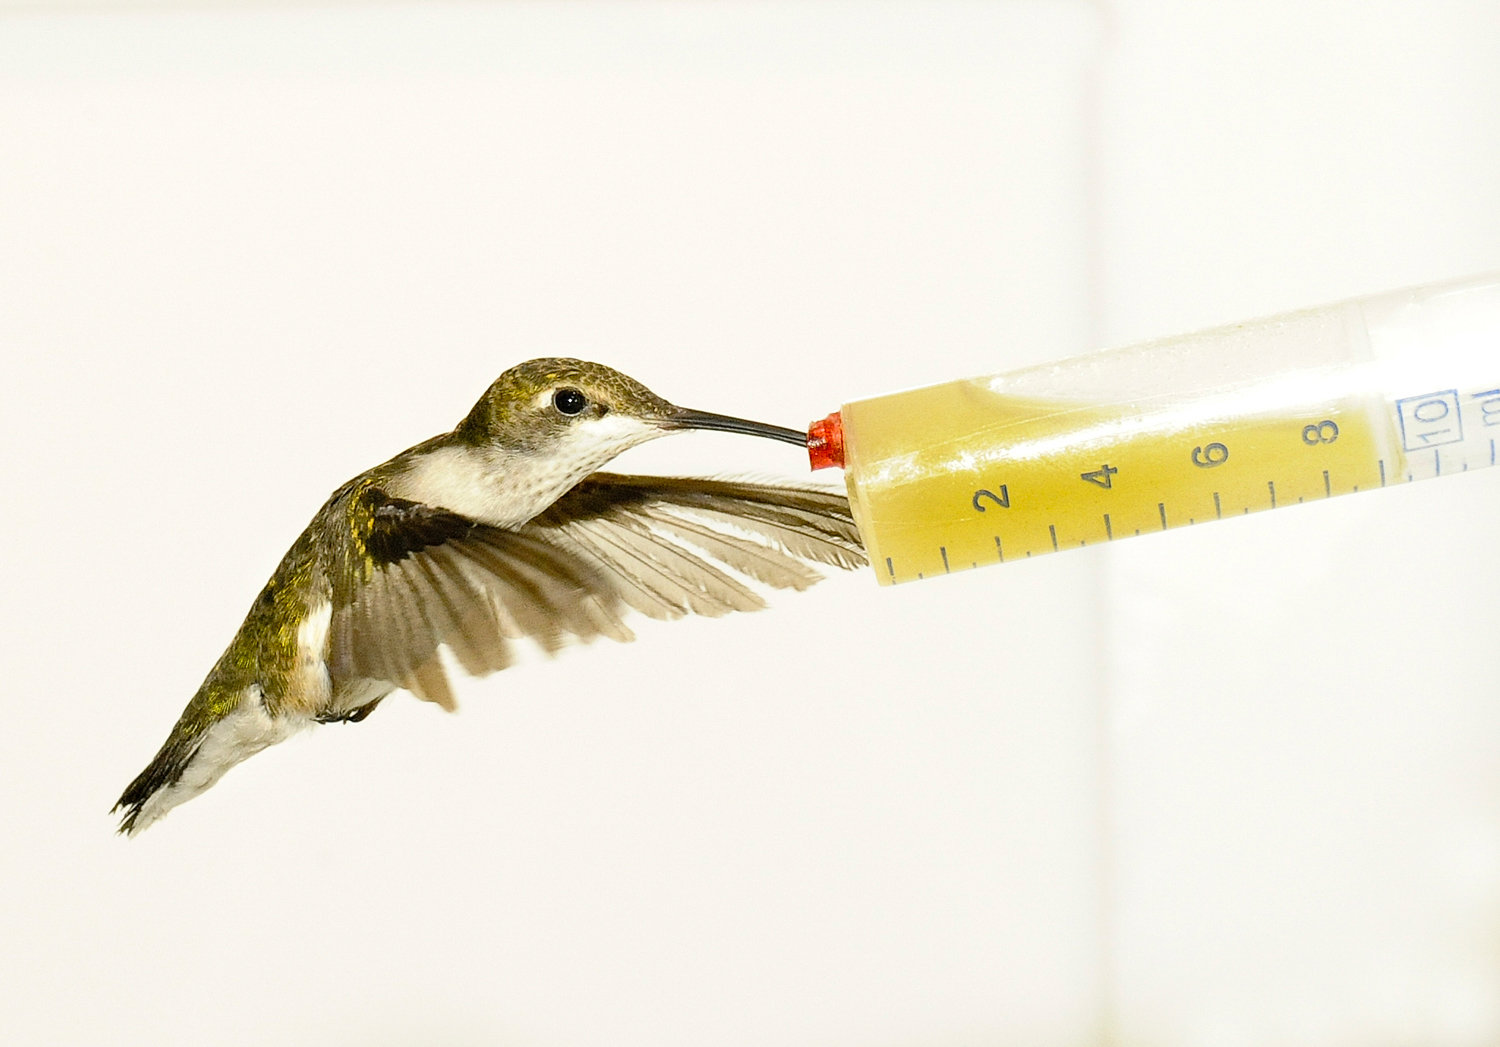 Do hummingbirds have high blood pressure?